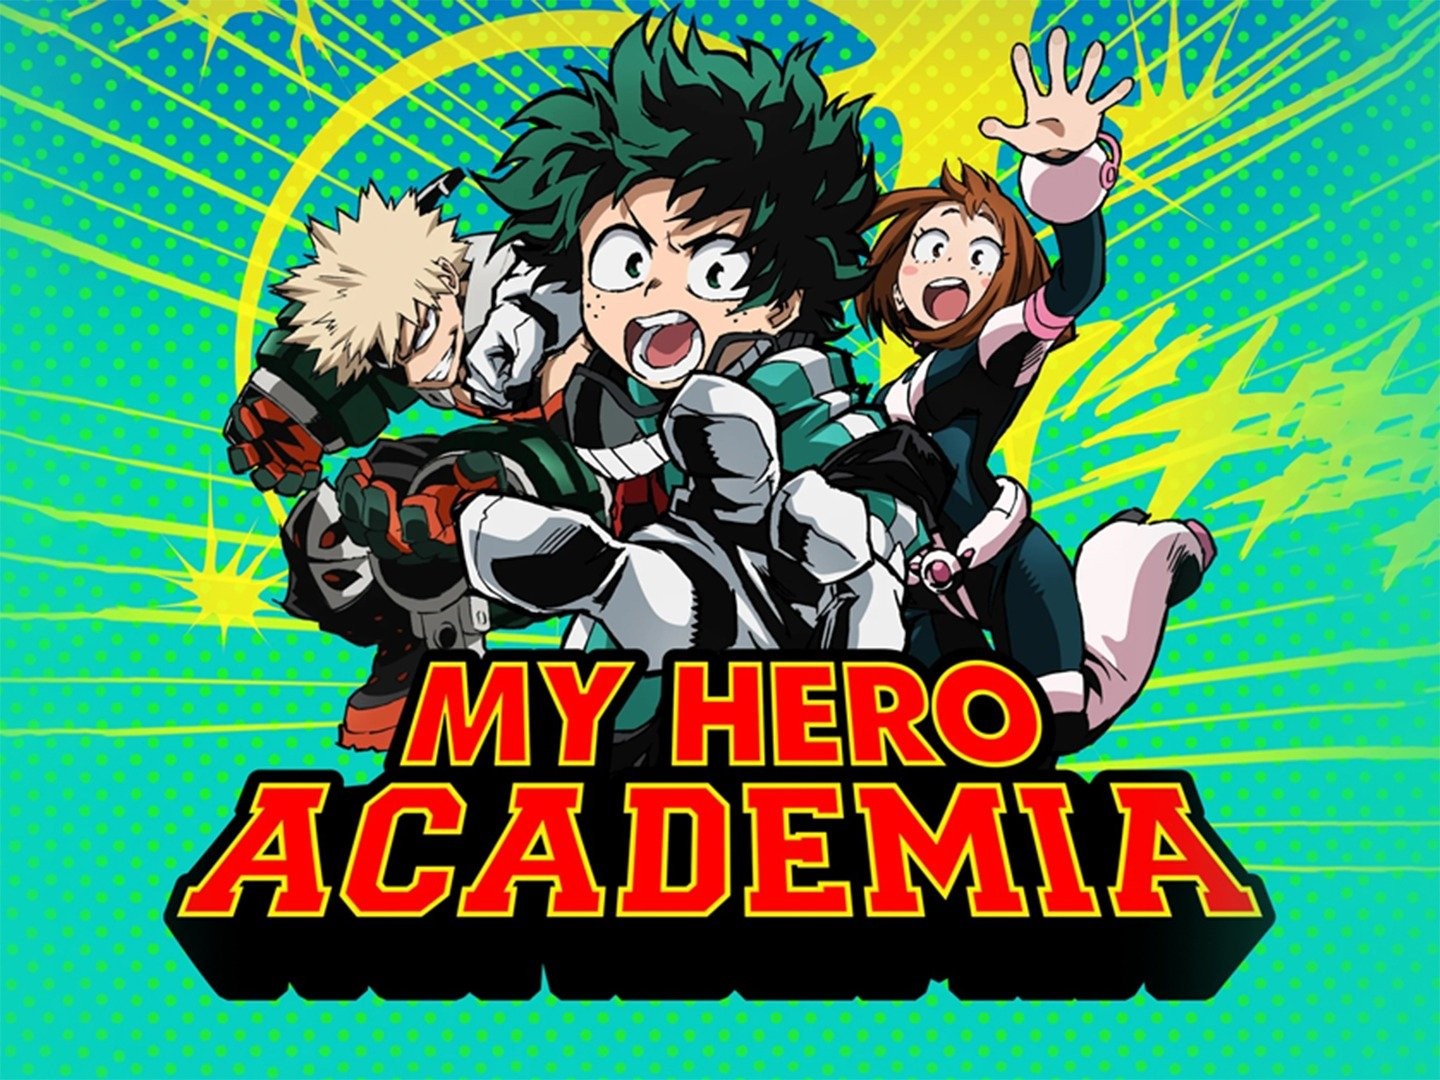 How many seasons of My Hero Academia are there?